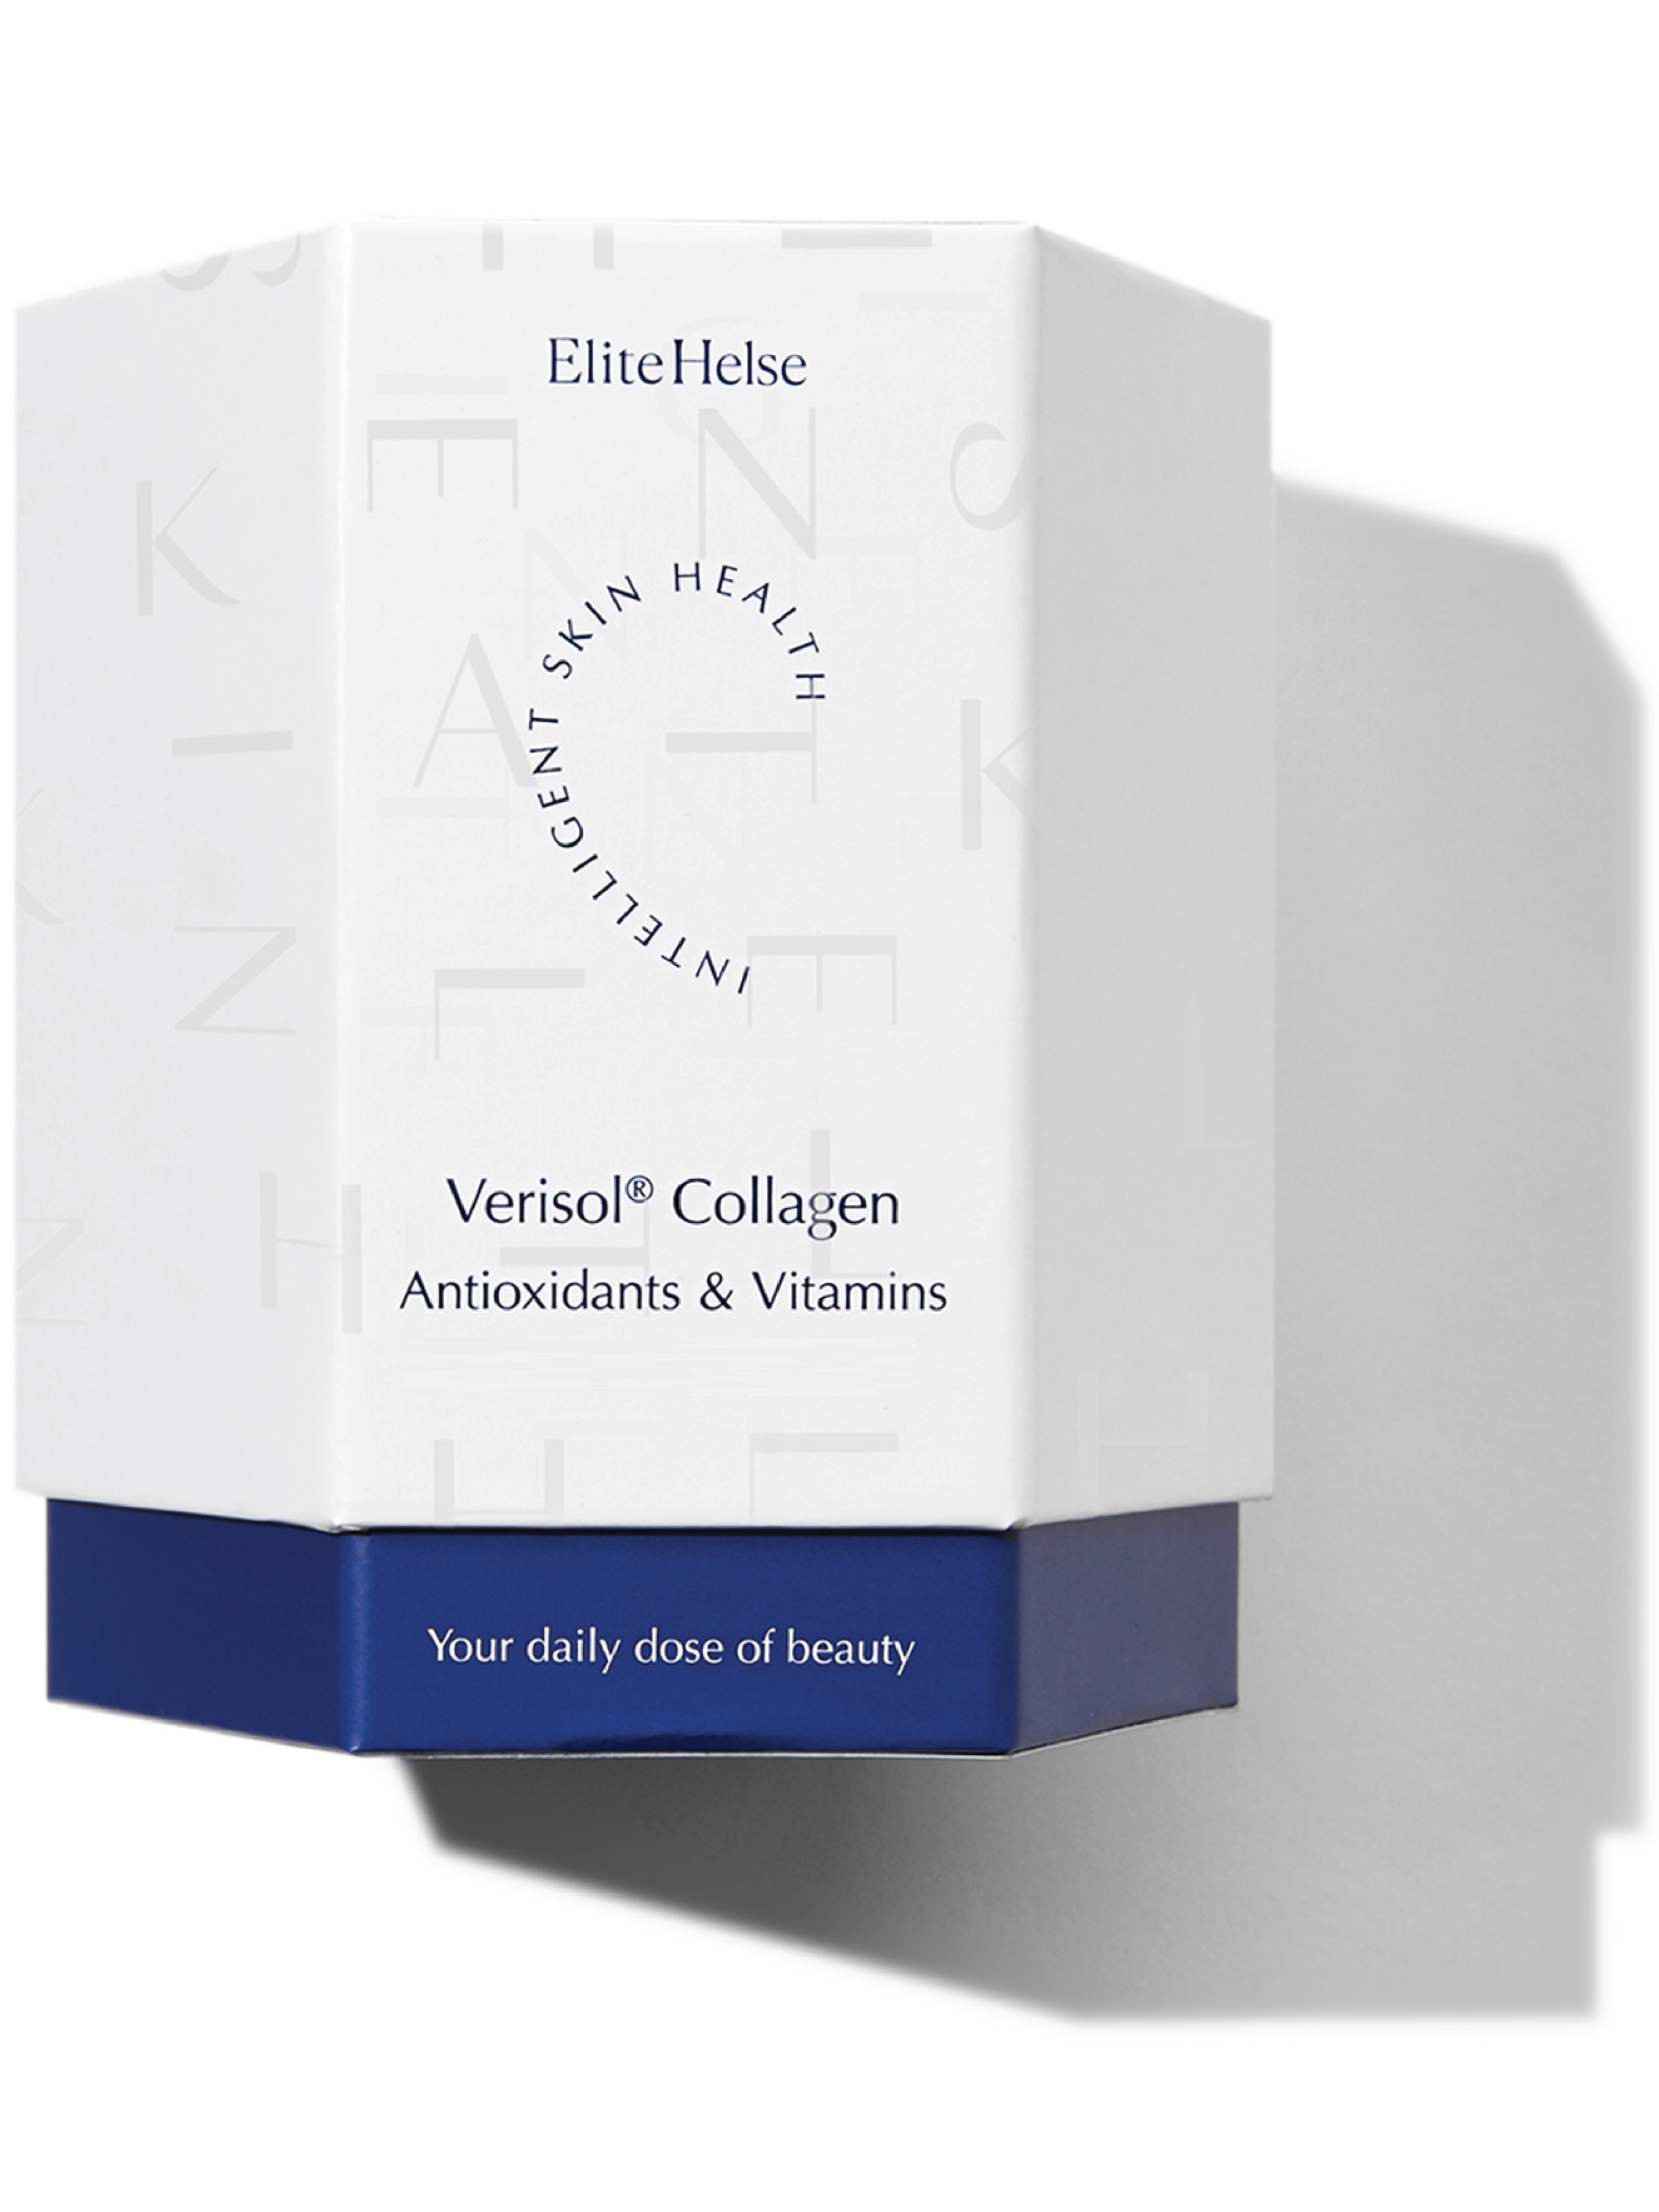 Elite Helse Intelligent Skin Health Verisol Collagen Antioxidants & Vitamins, 74 gram